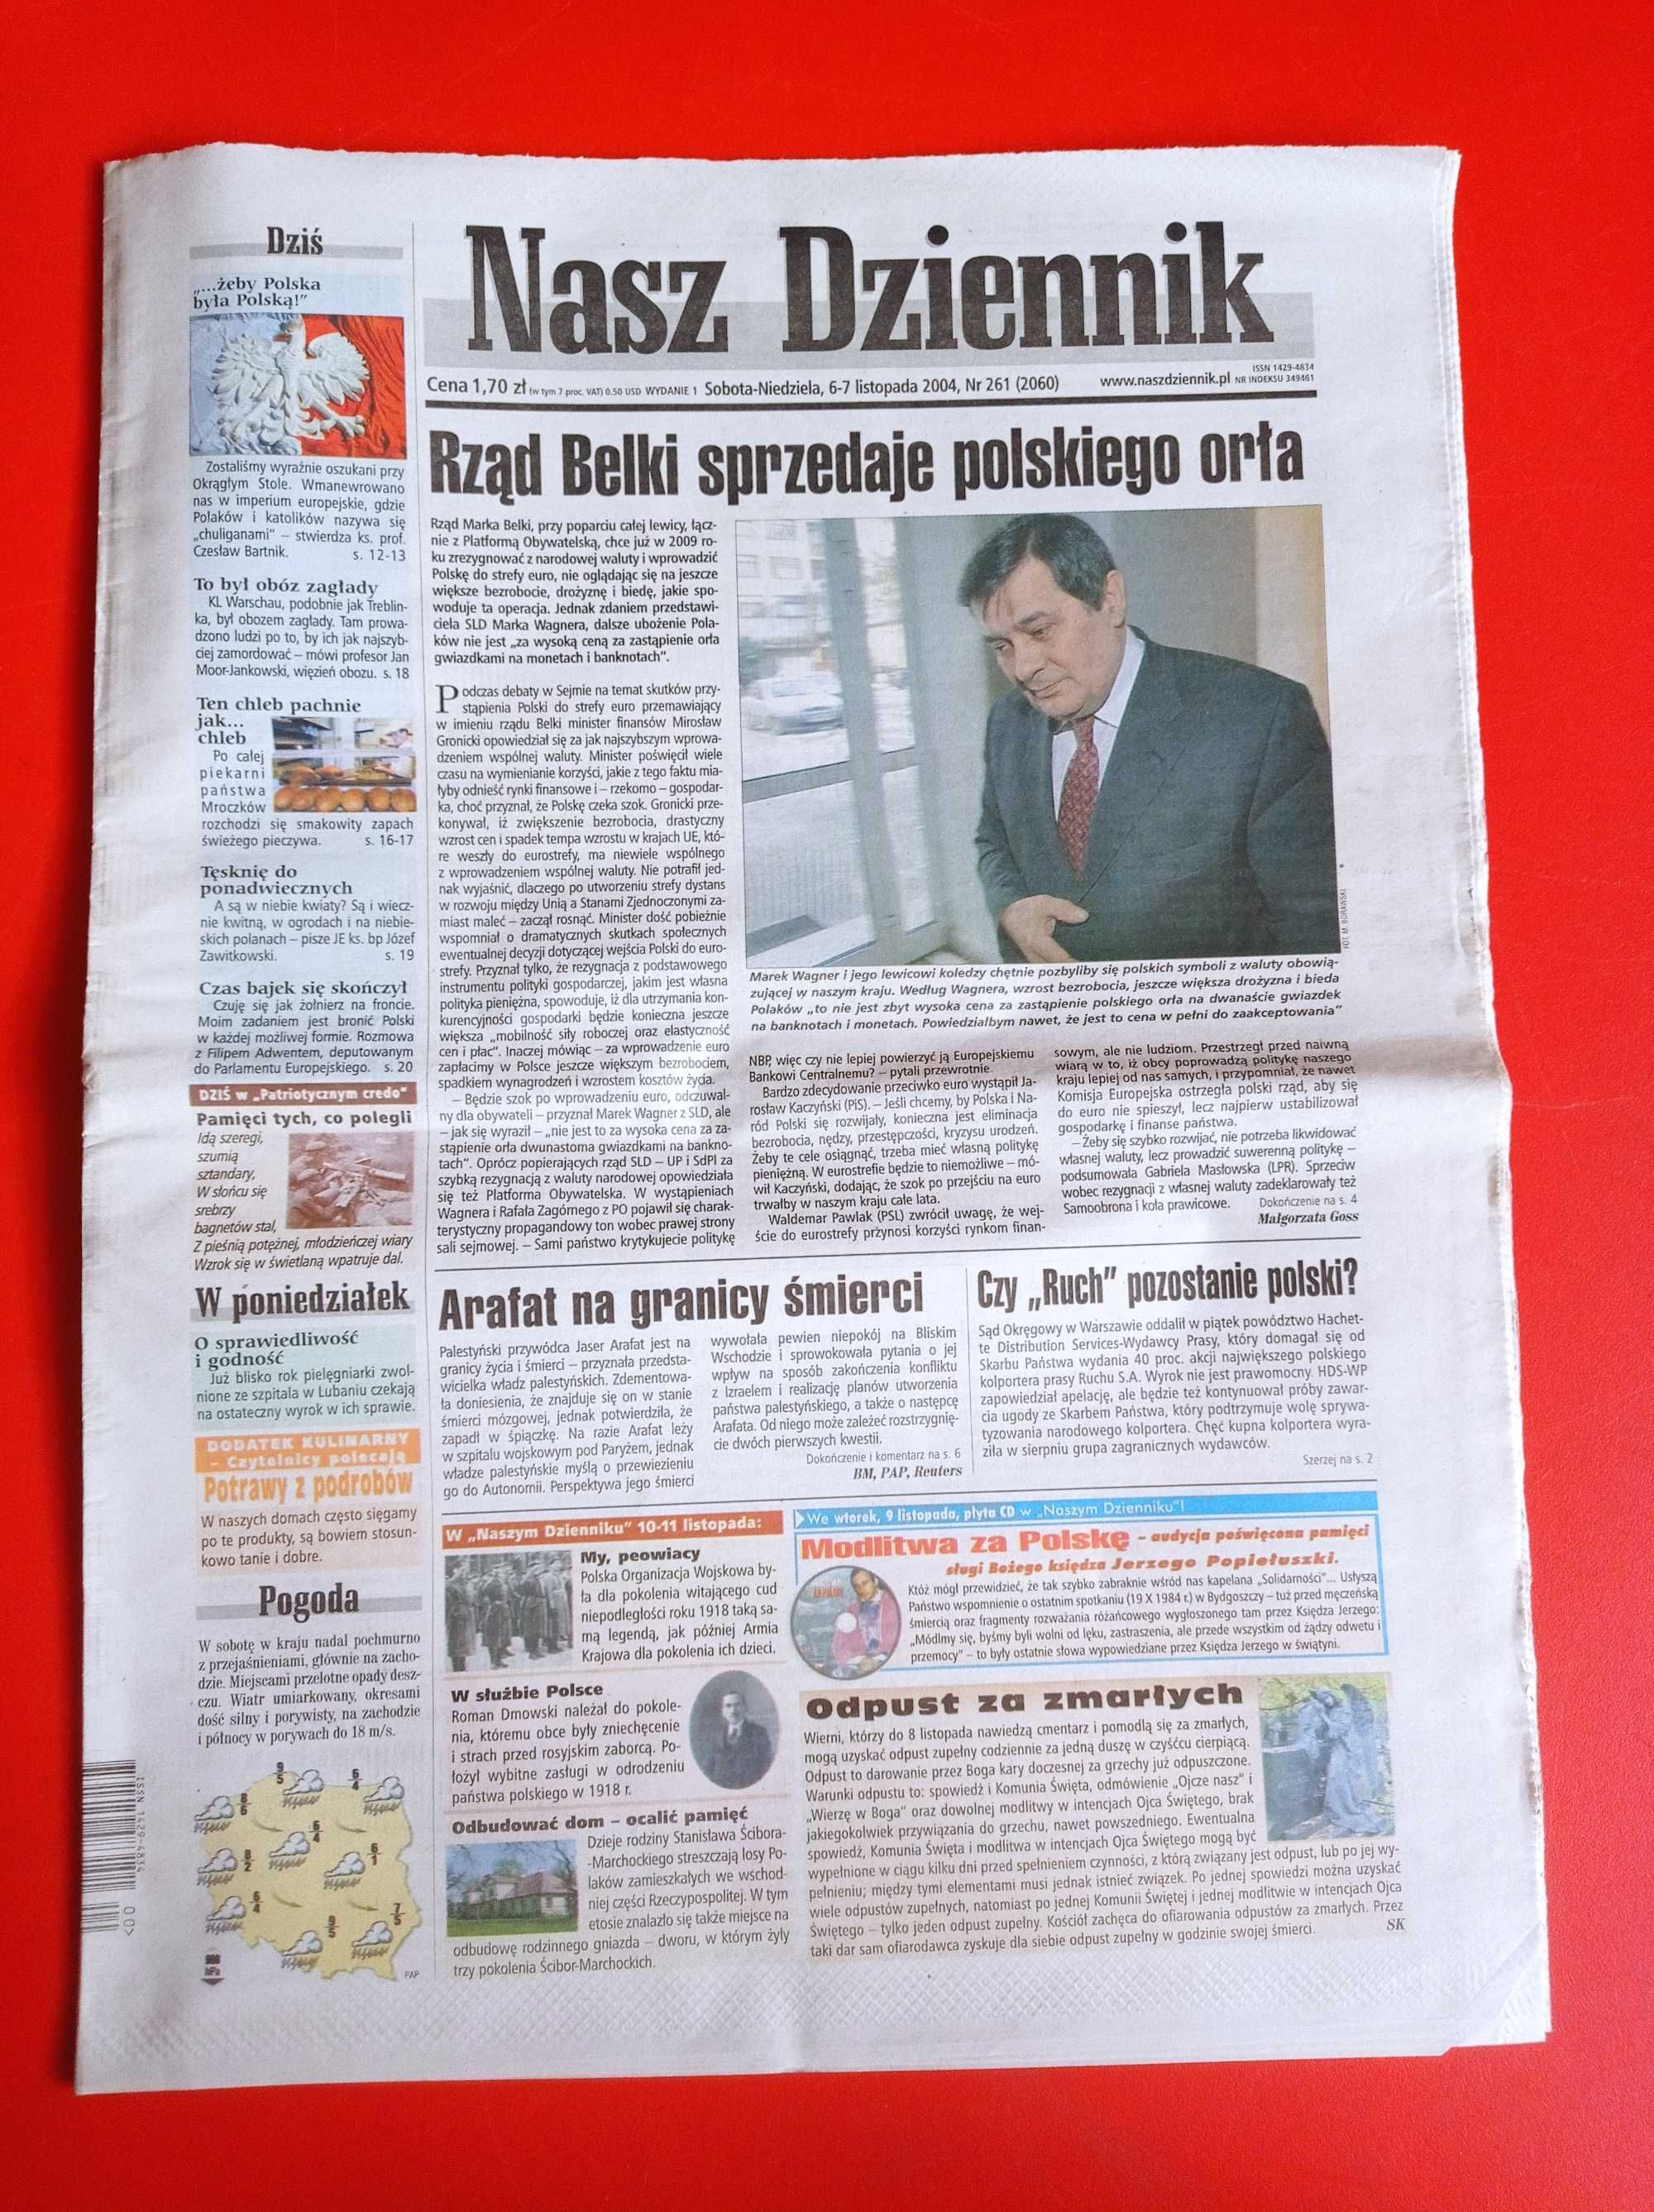 Nasz Dziennik, nr 261/2004, 6-7 listopada 2004